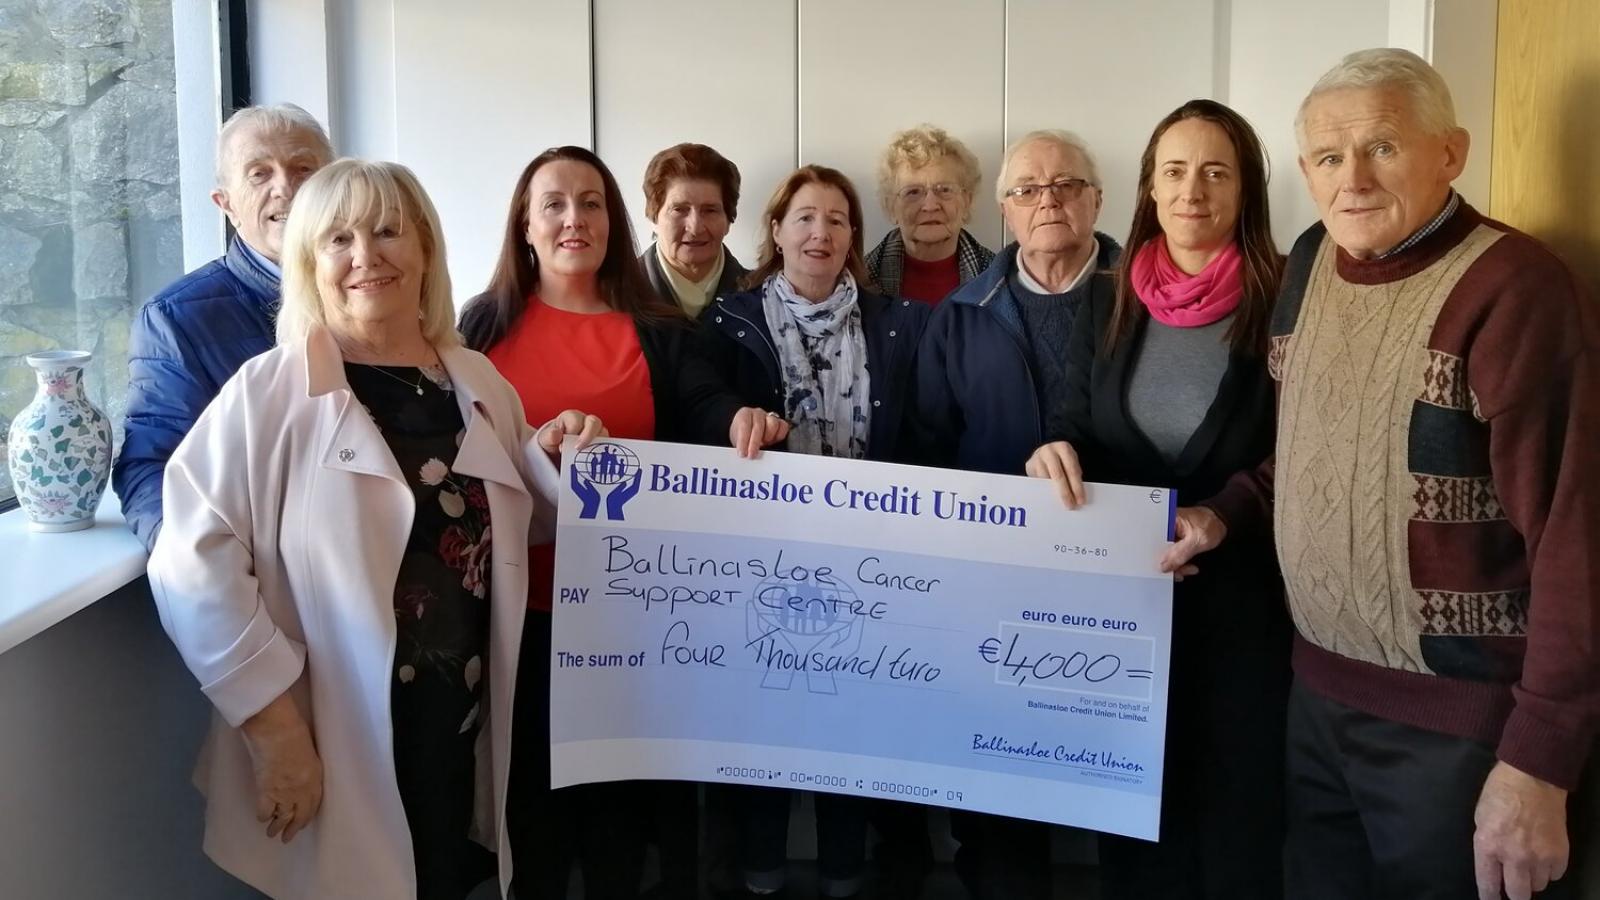 Ballinasloe Cancer Support Centre